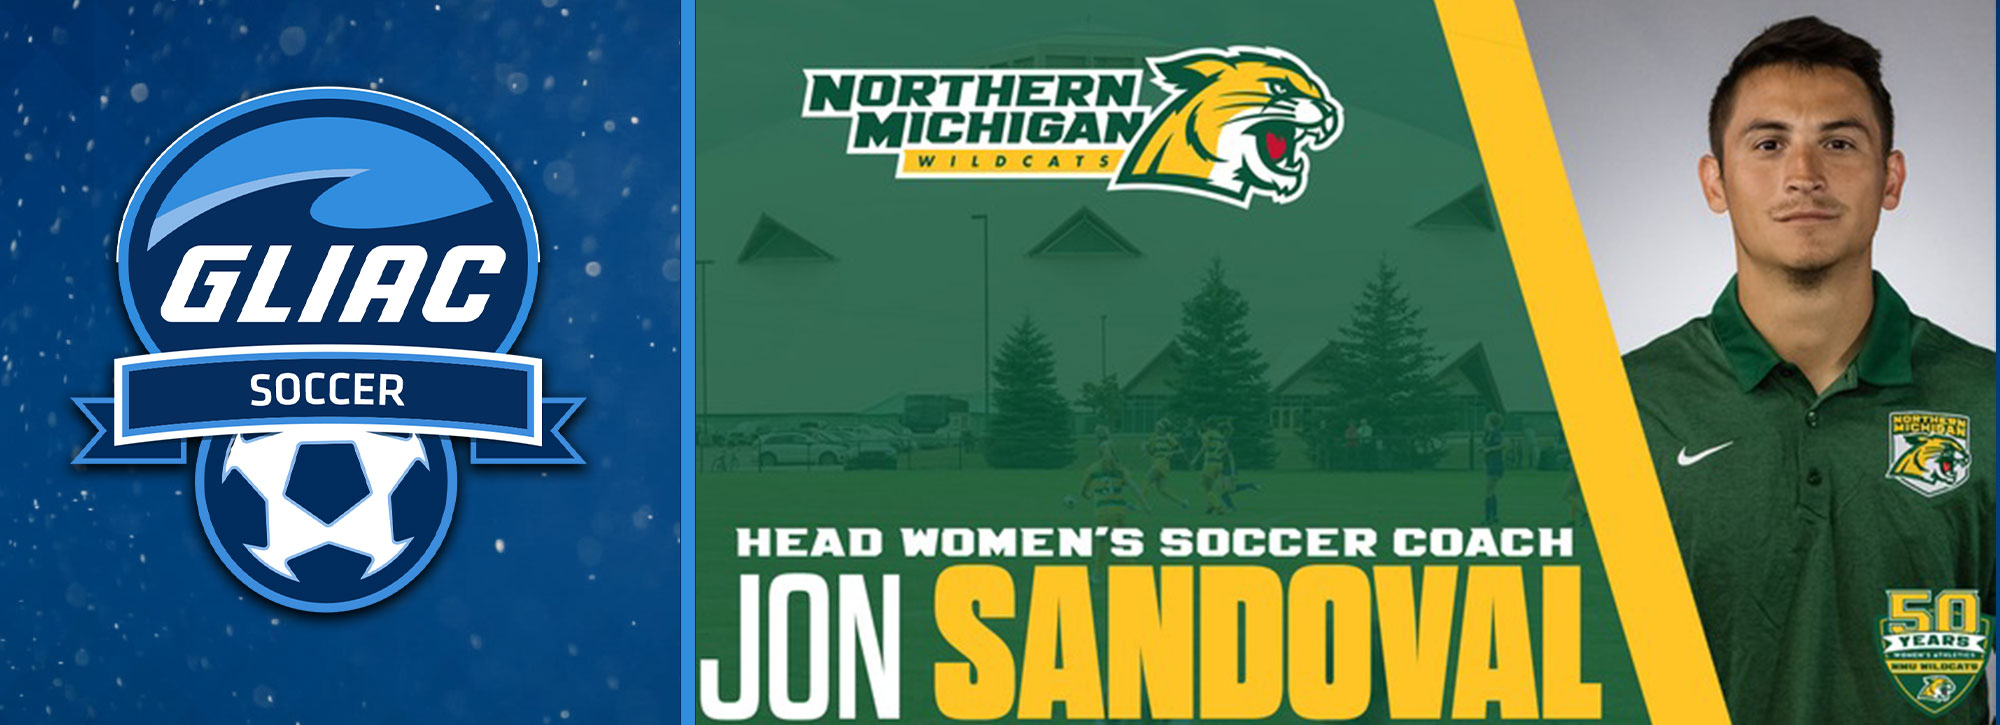 Jon Sandoval Named NMU's Head Women's Soccer Coach